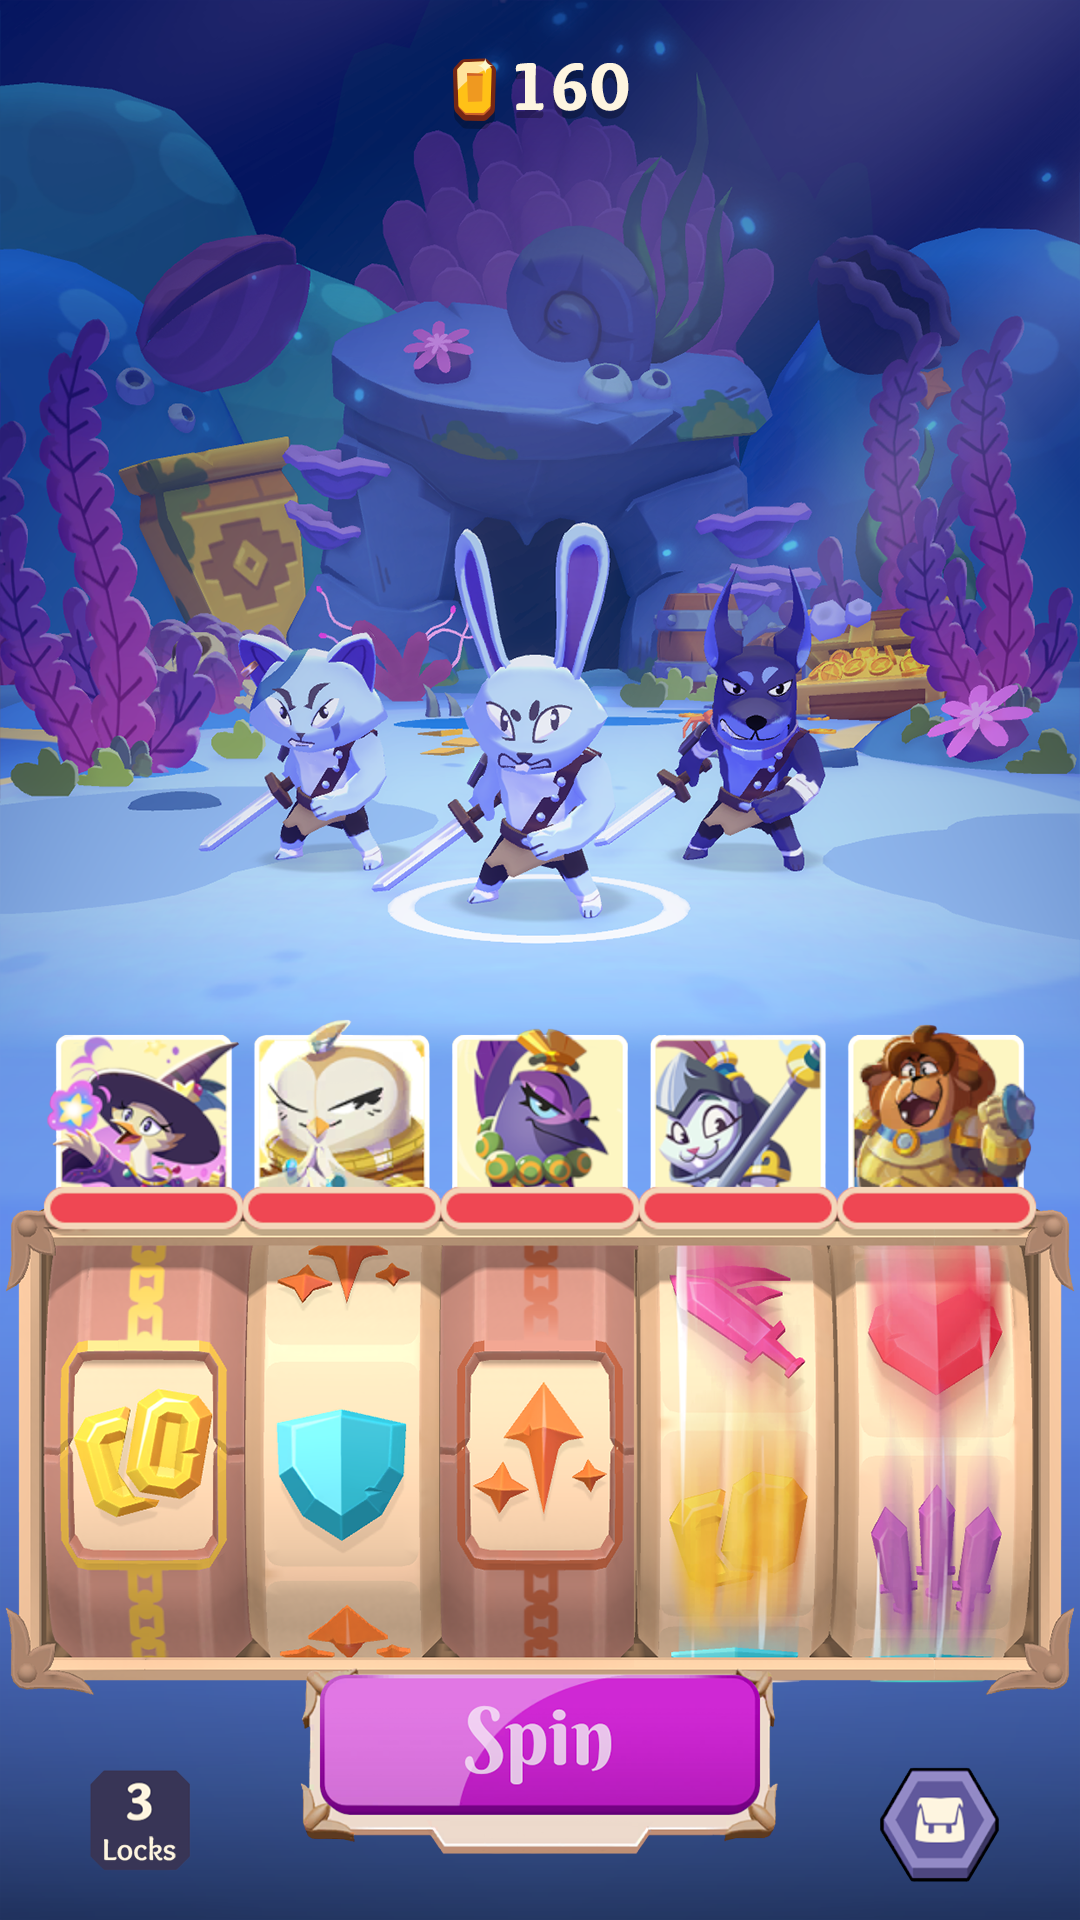 Adventure Friends screenshot game